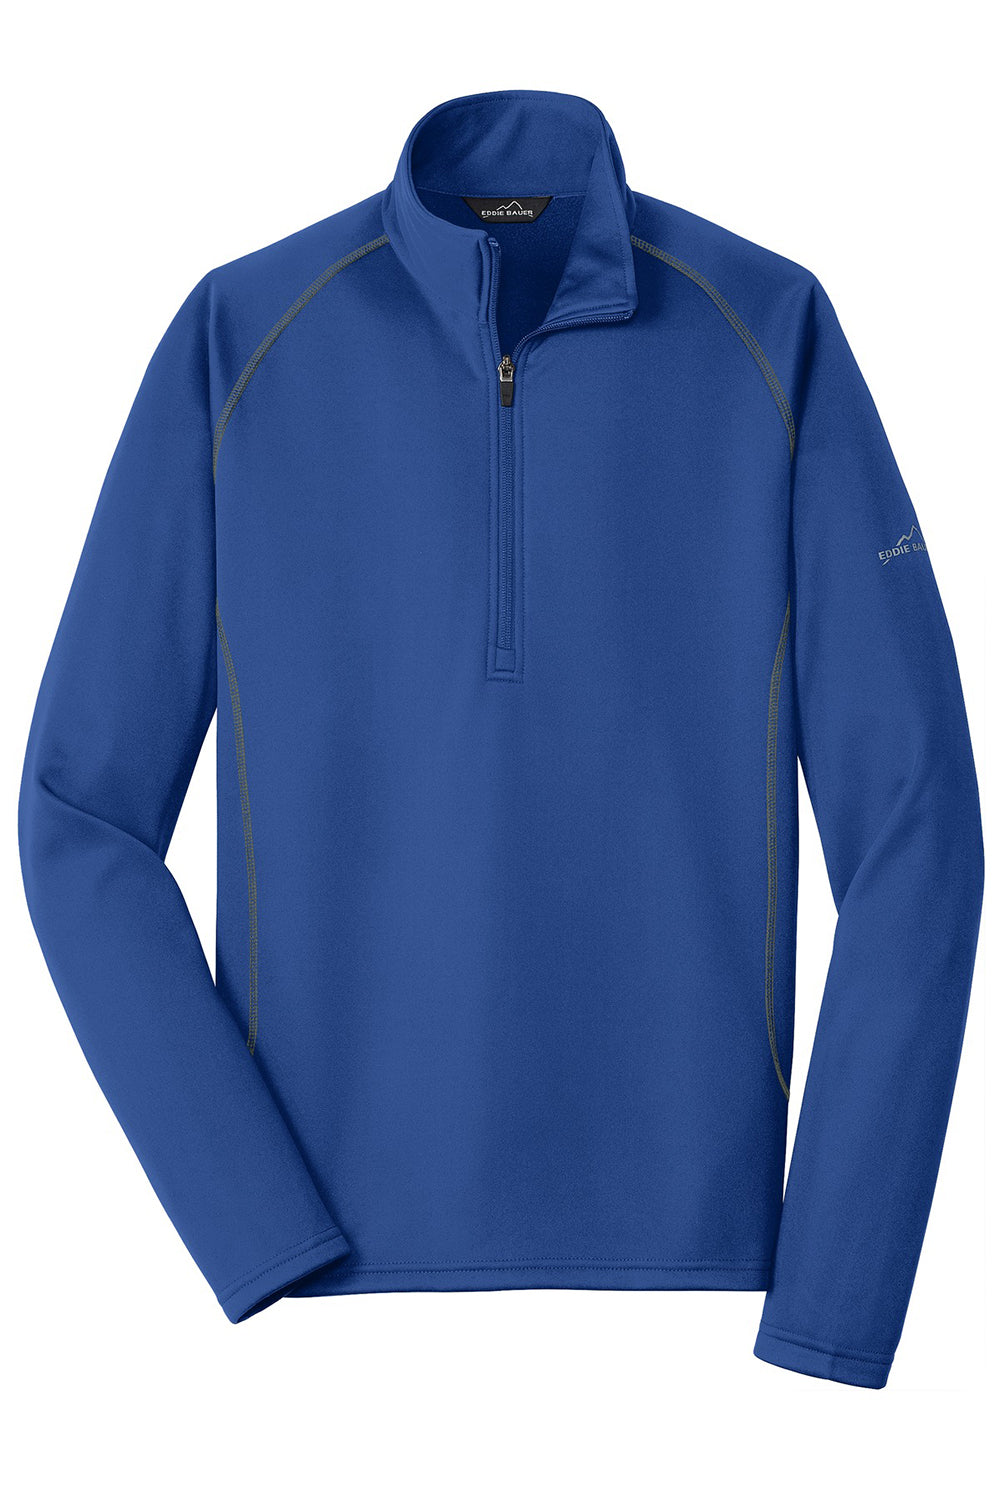 Eddie Bauer EB236 Mens Smooth Fleece 1/4 Zip Sweatshirt Cobalt Blue Flat Front